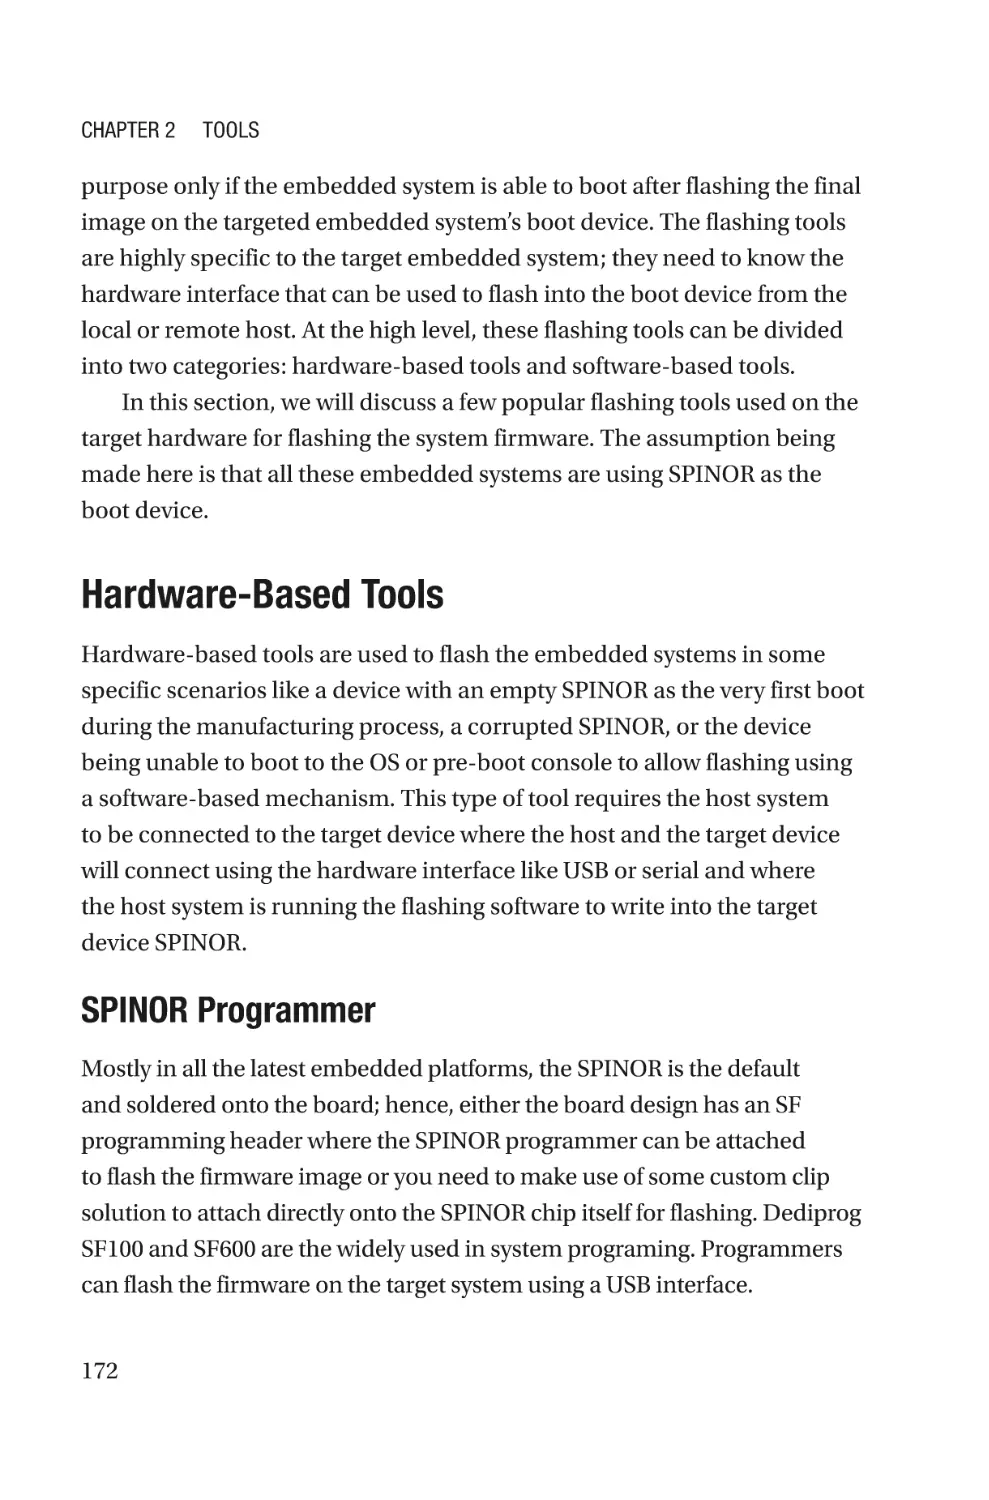 Hardware-Based Tools
SPINOR Programmer